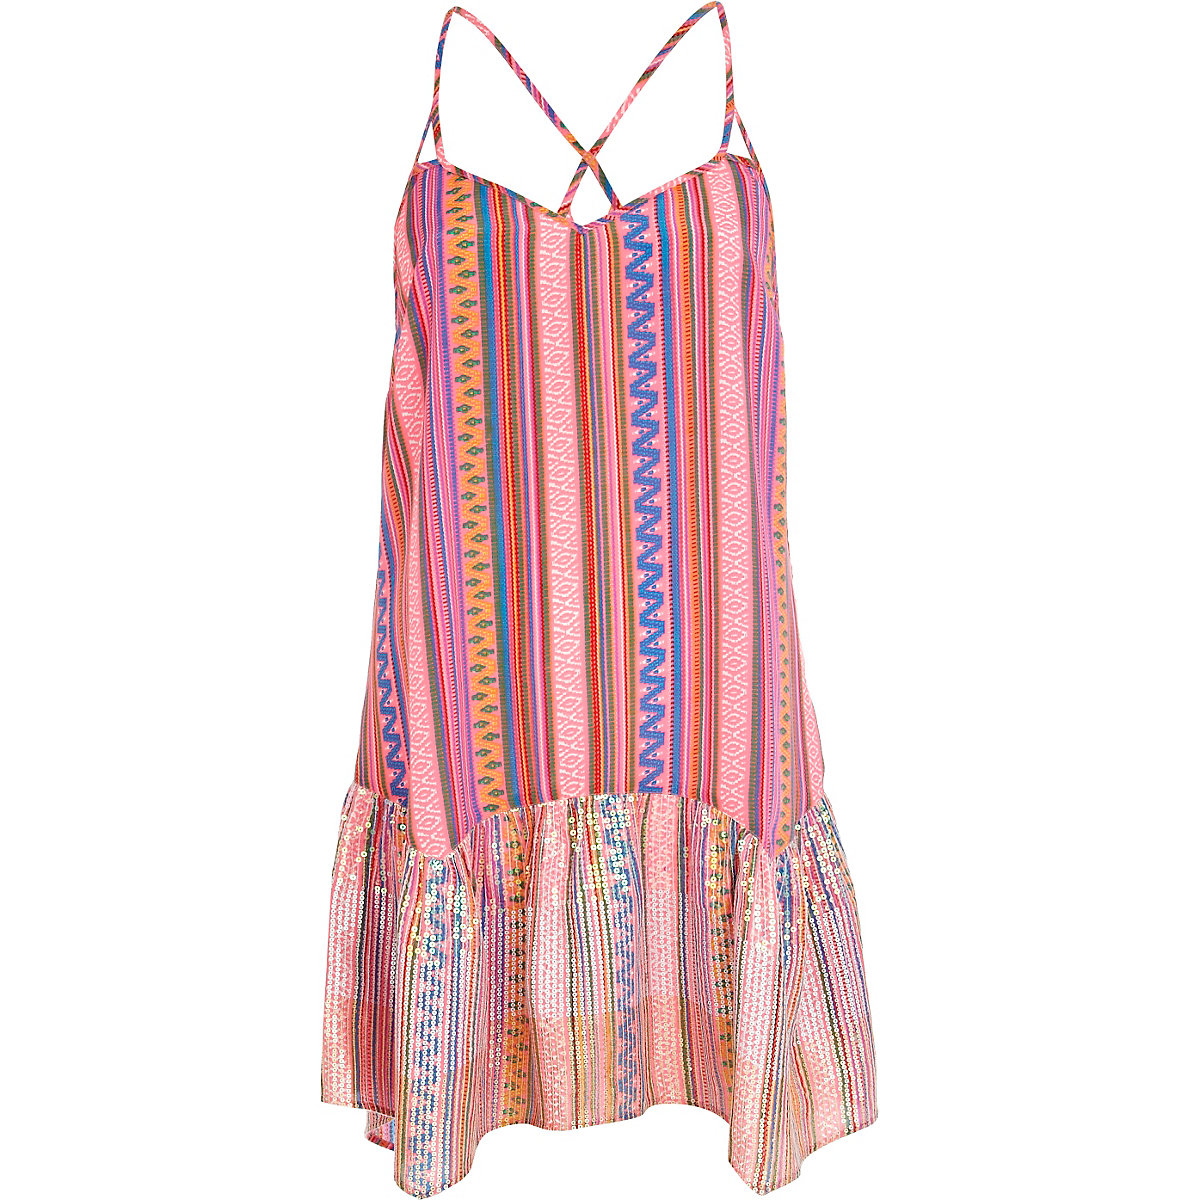 Pink aztec print sequin embellished dress - Swimwear & Beachwear - Sale ...